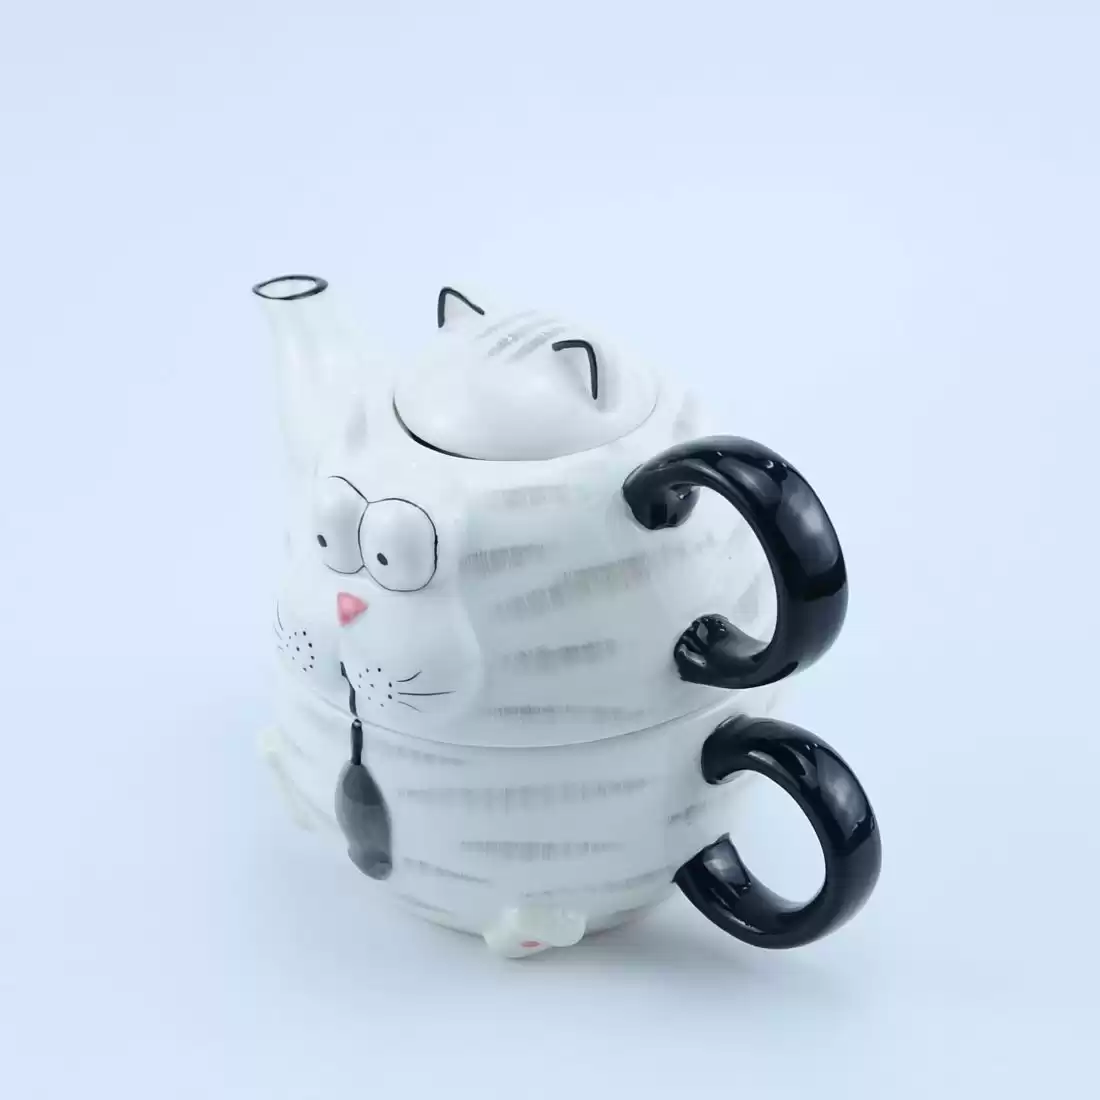 Artistic Ceramic Coffee Pot with Cat-Inspired Design